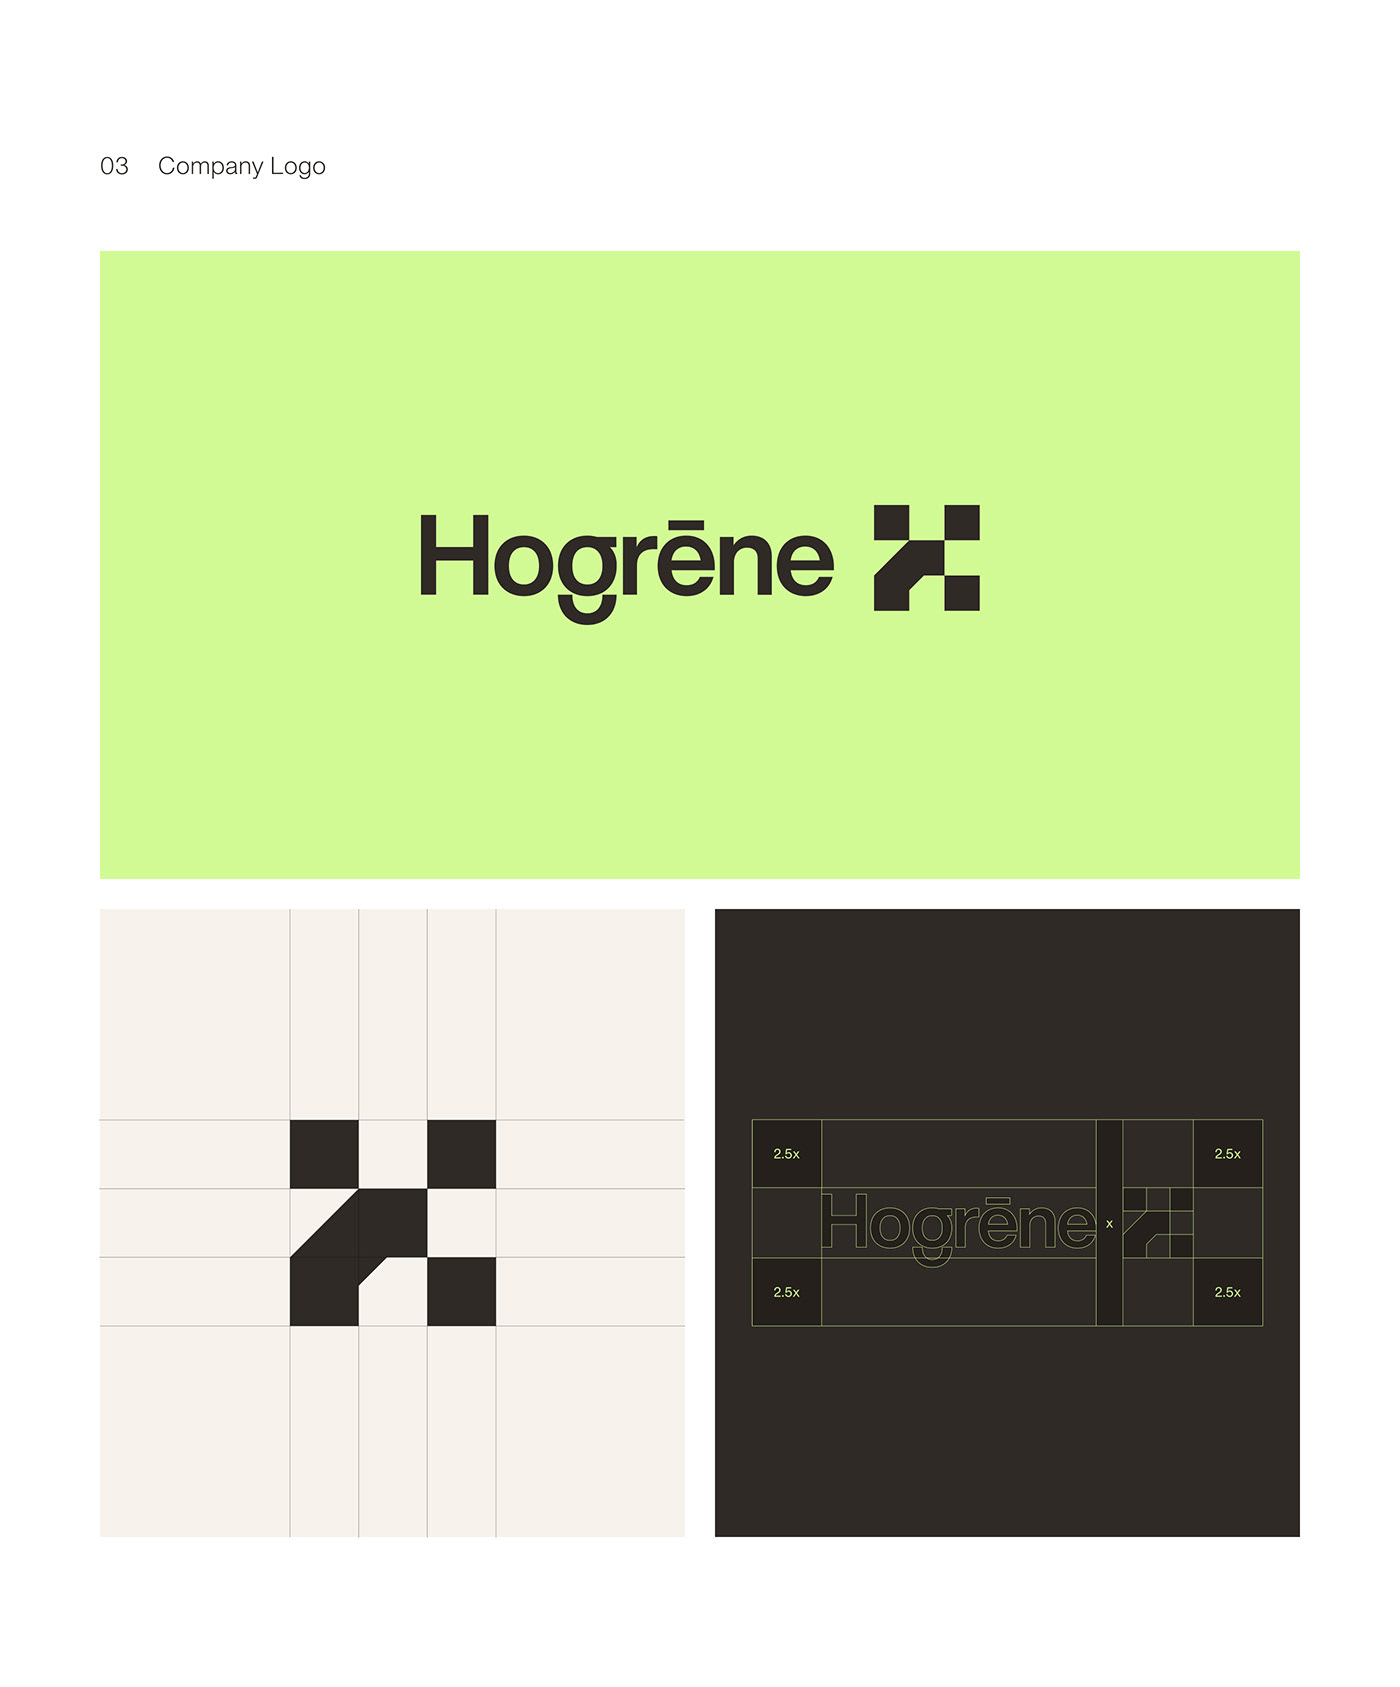 Hogrene case study by Uniko studio. Company logo.